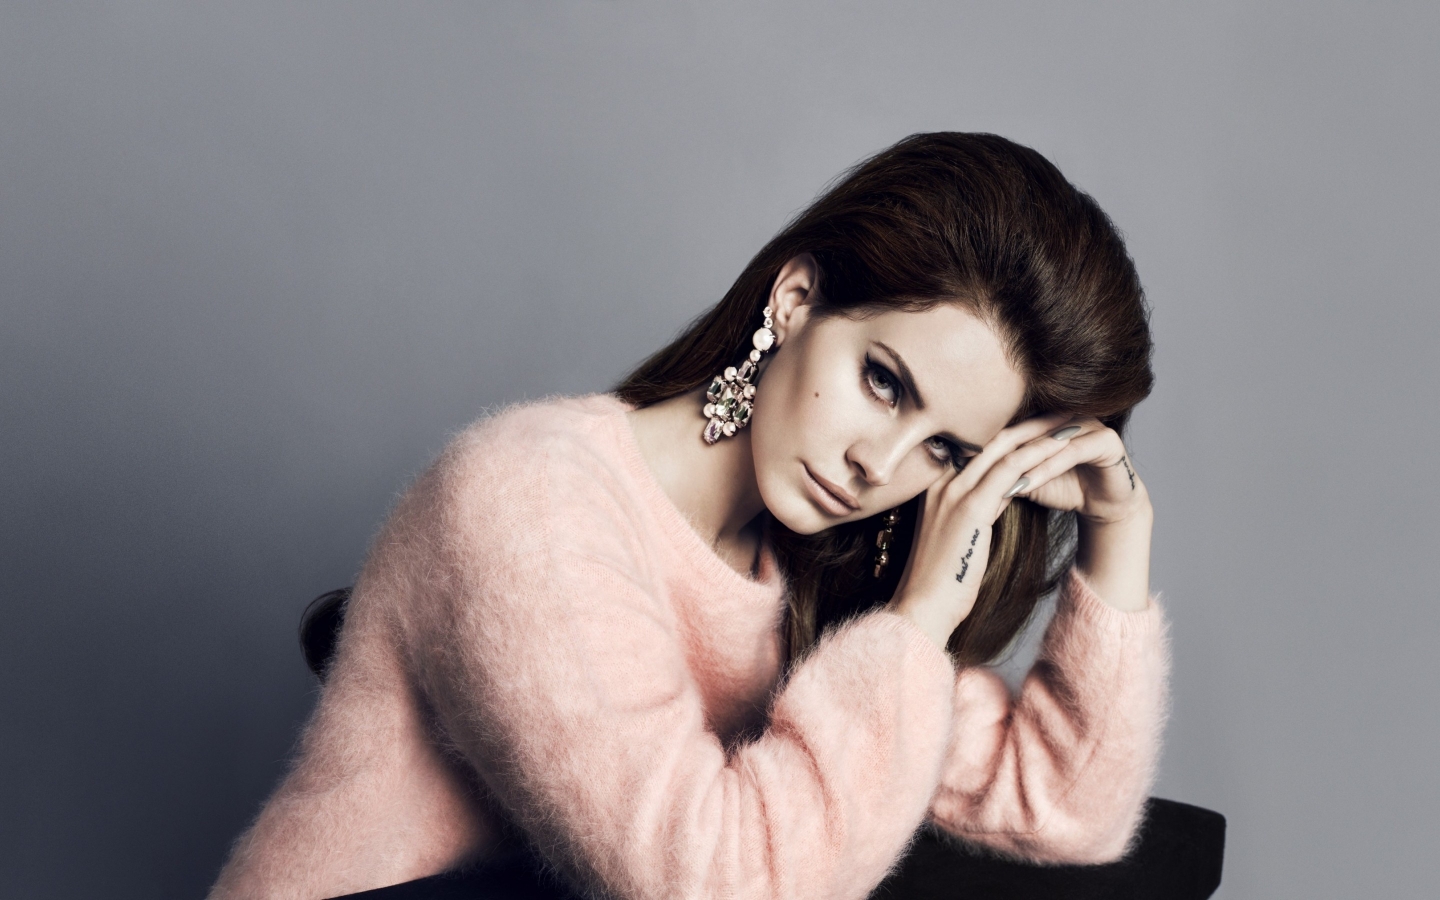 Beautiful Lana Del Rey for 1440 x 900 widescreen resolution